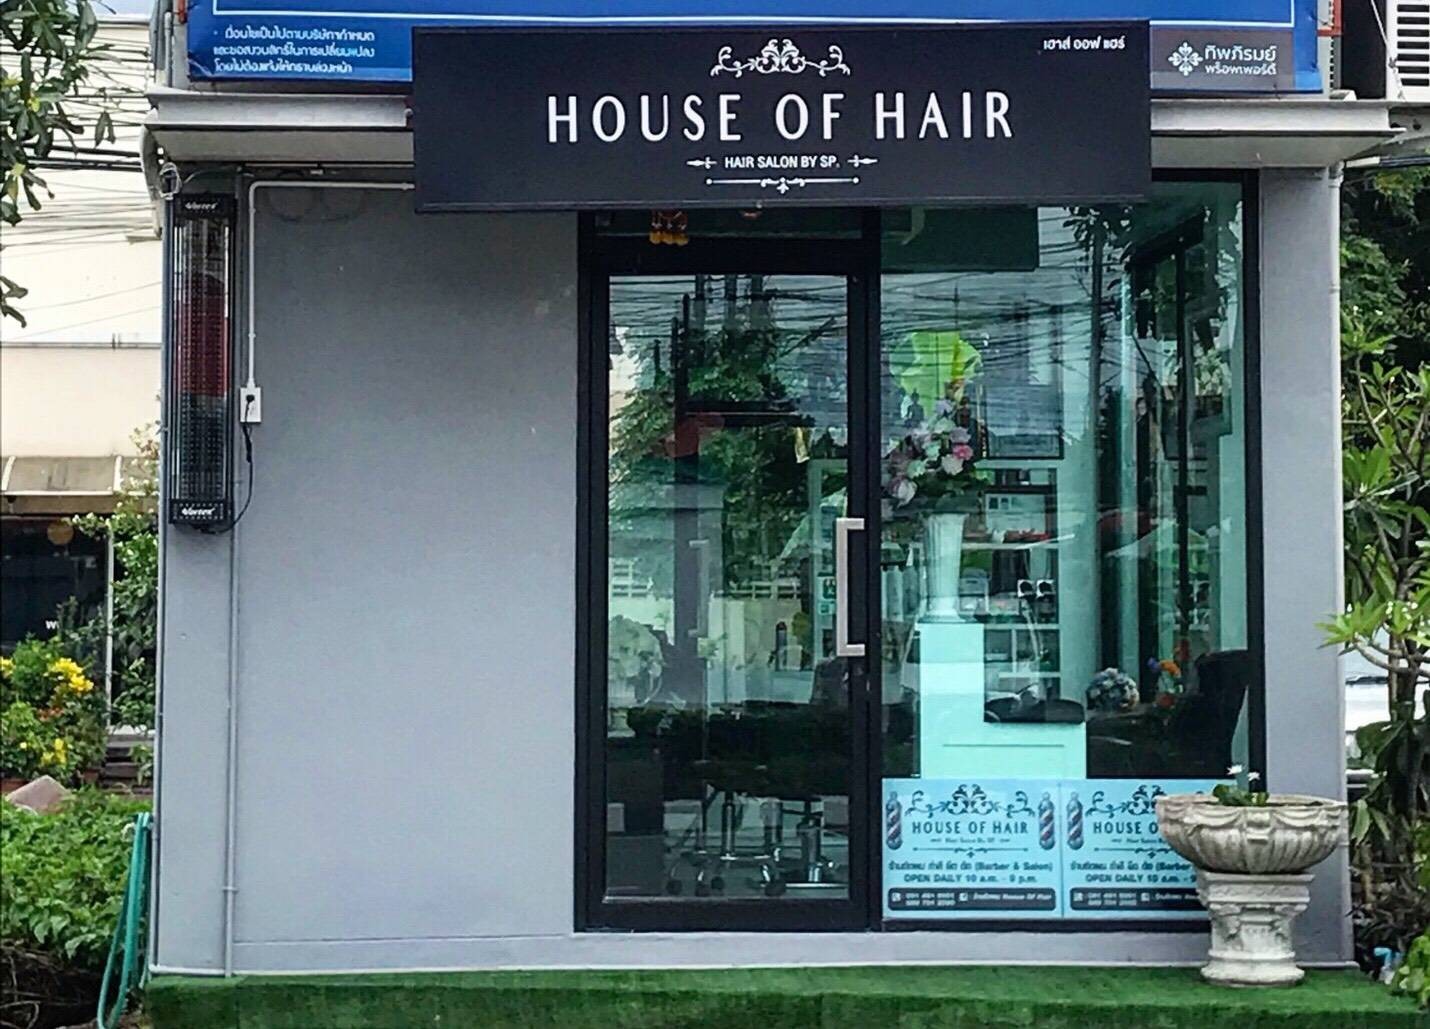 HOUSE OF HAIR